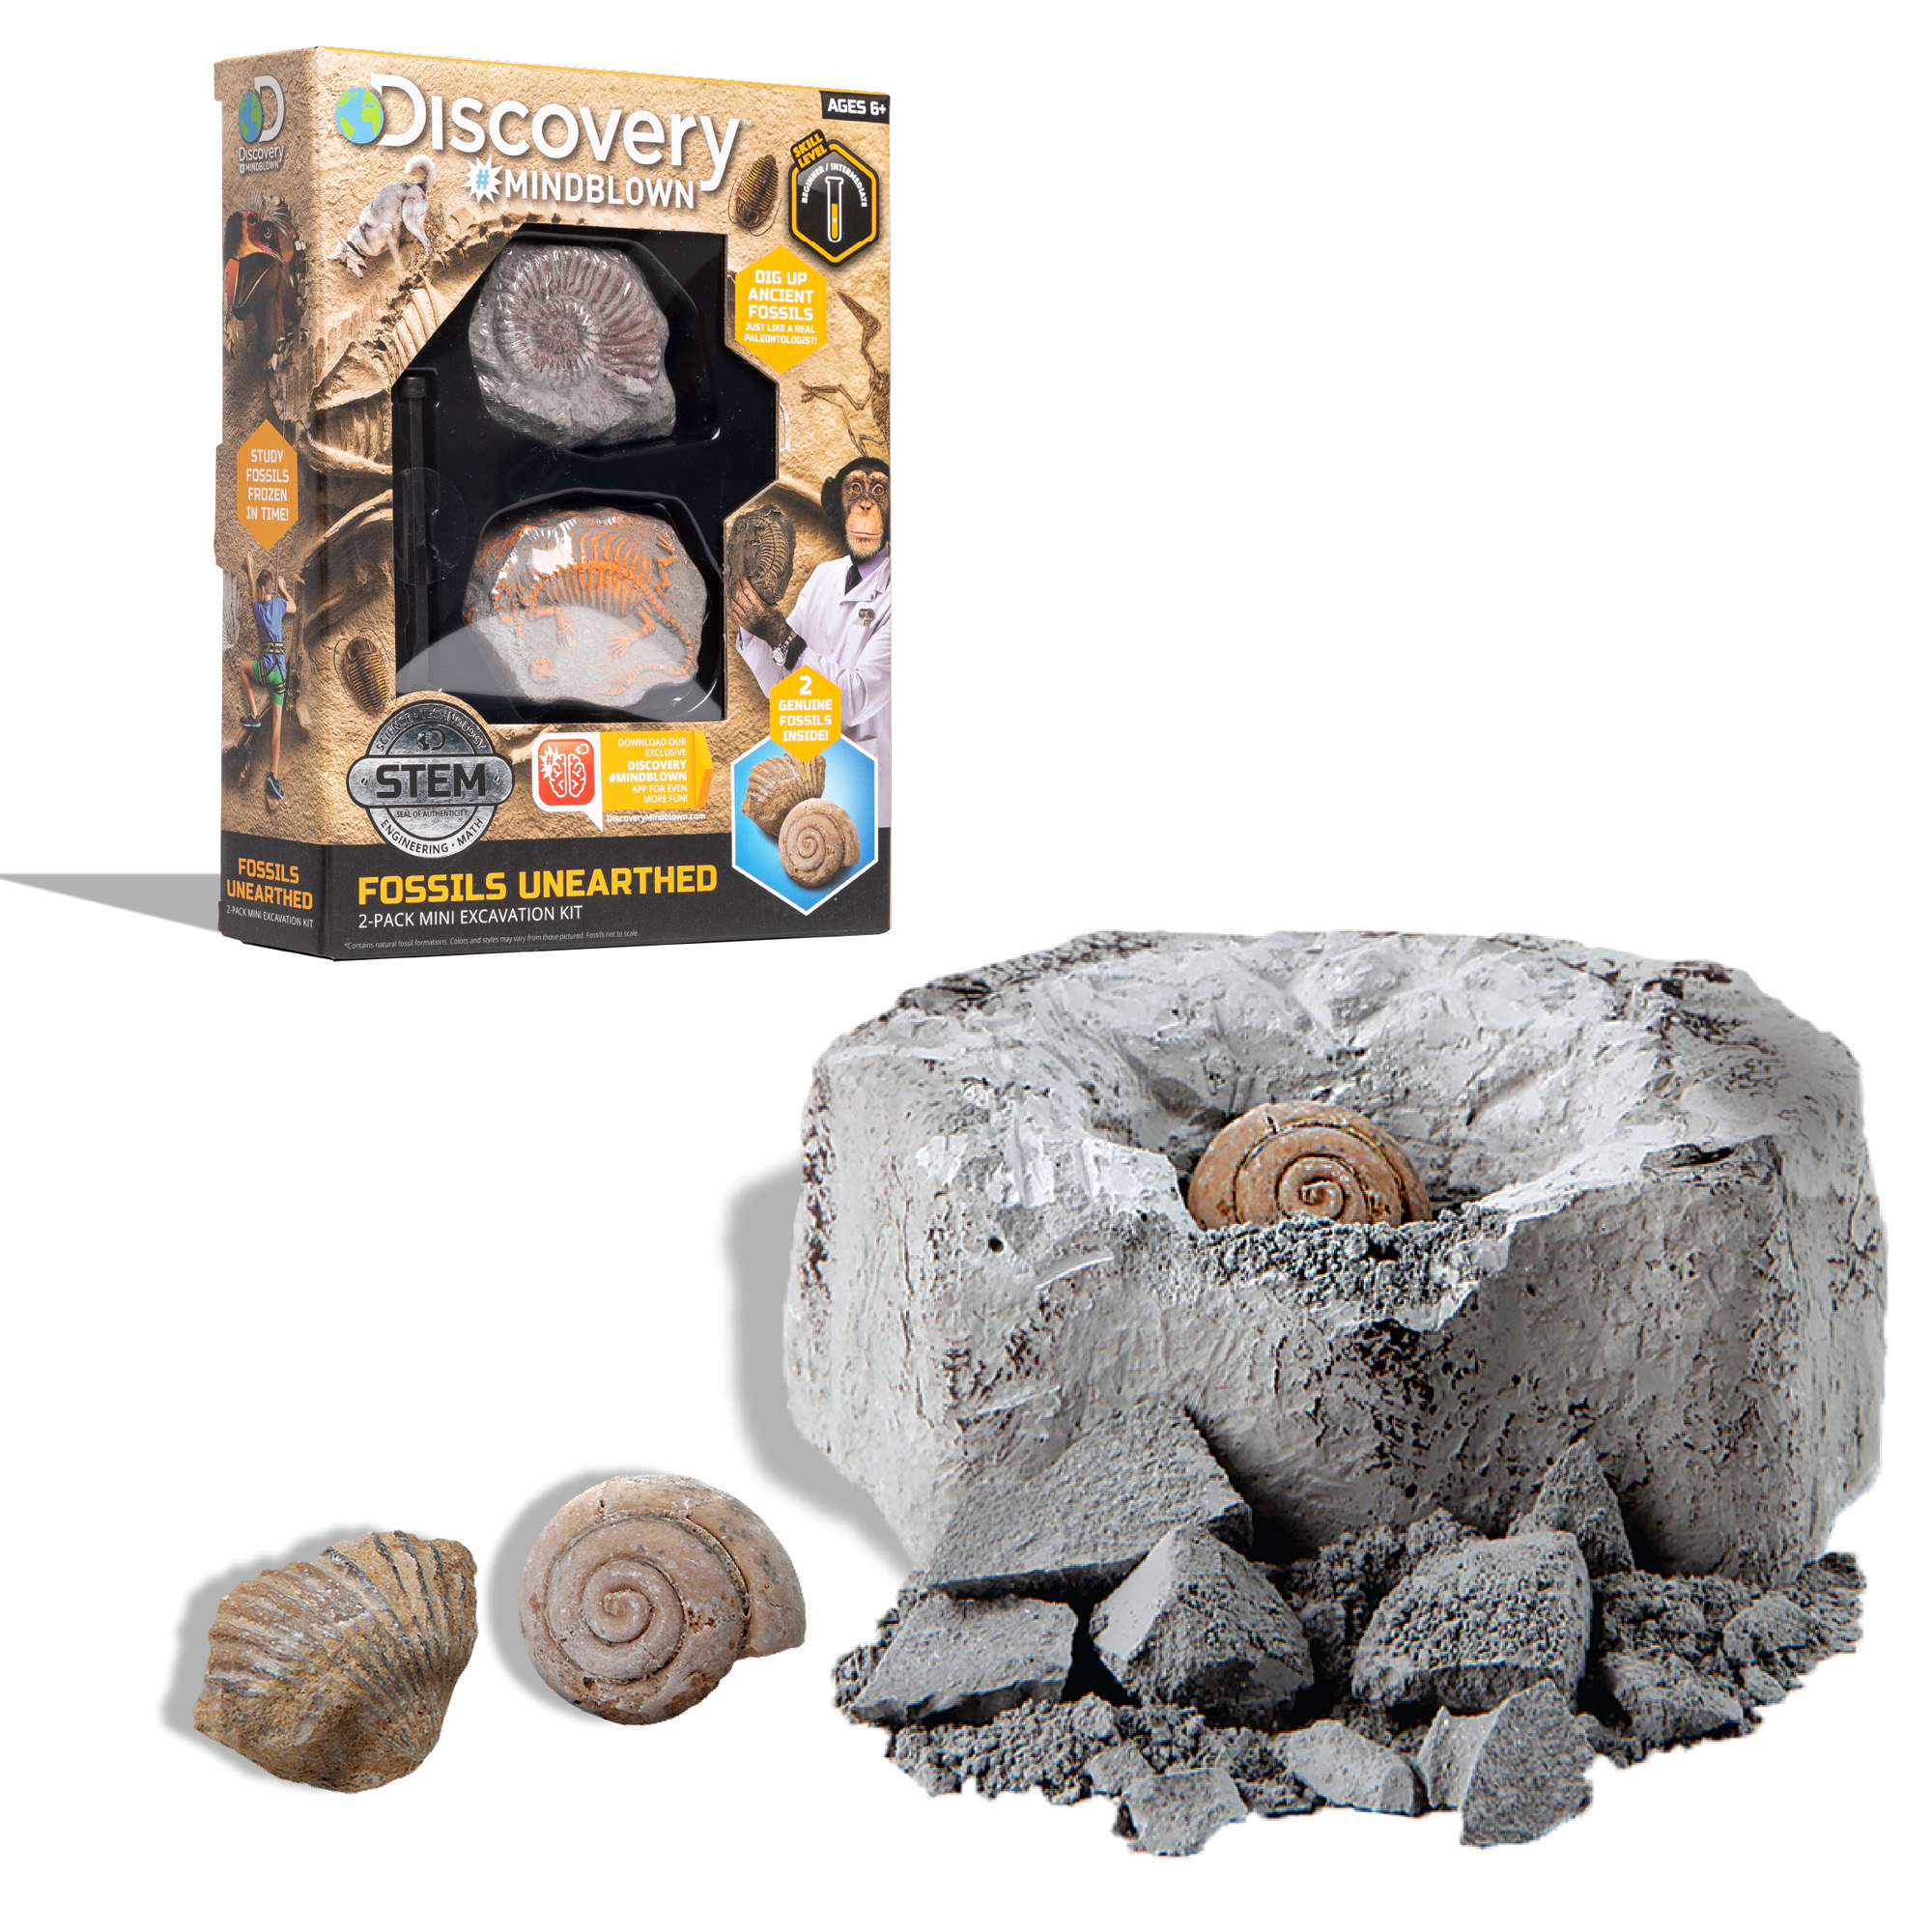 Kit paleontologo con 2 mini fossili - Discovery Mindblown